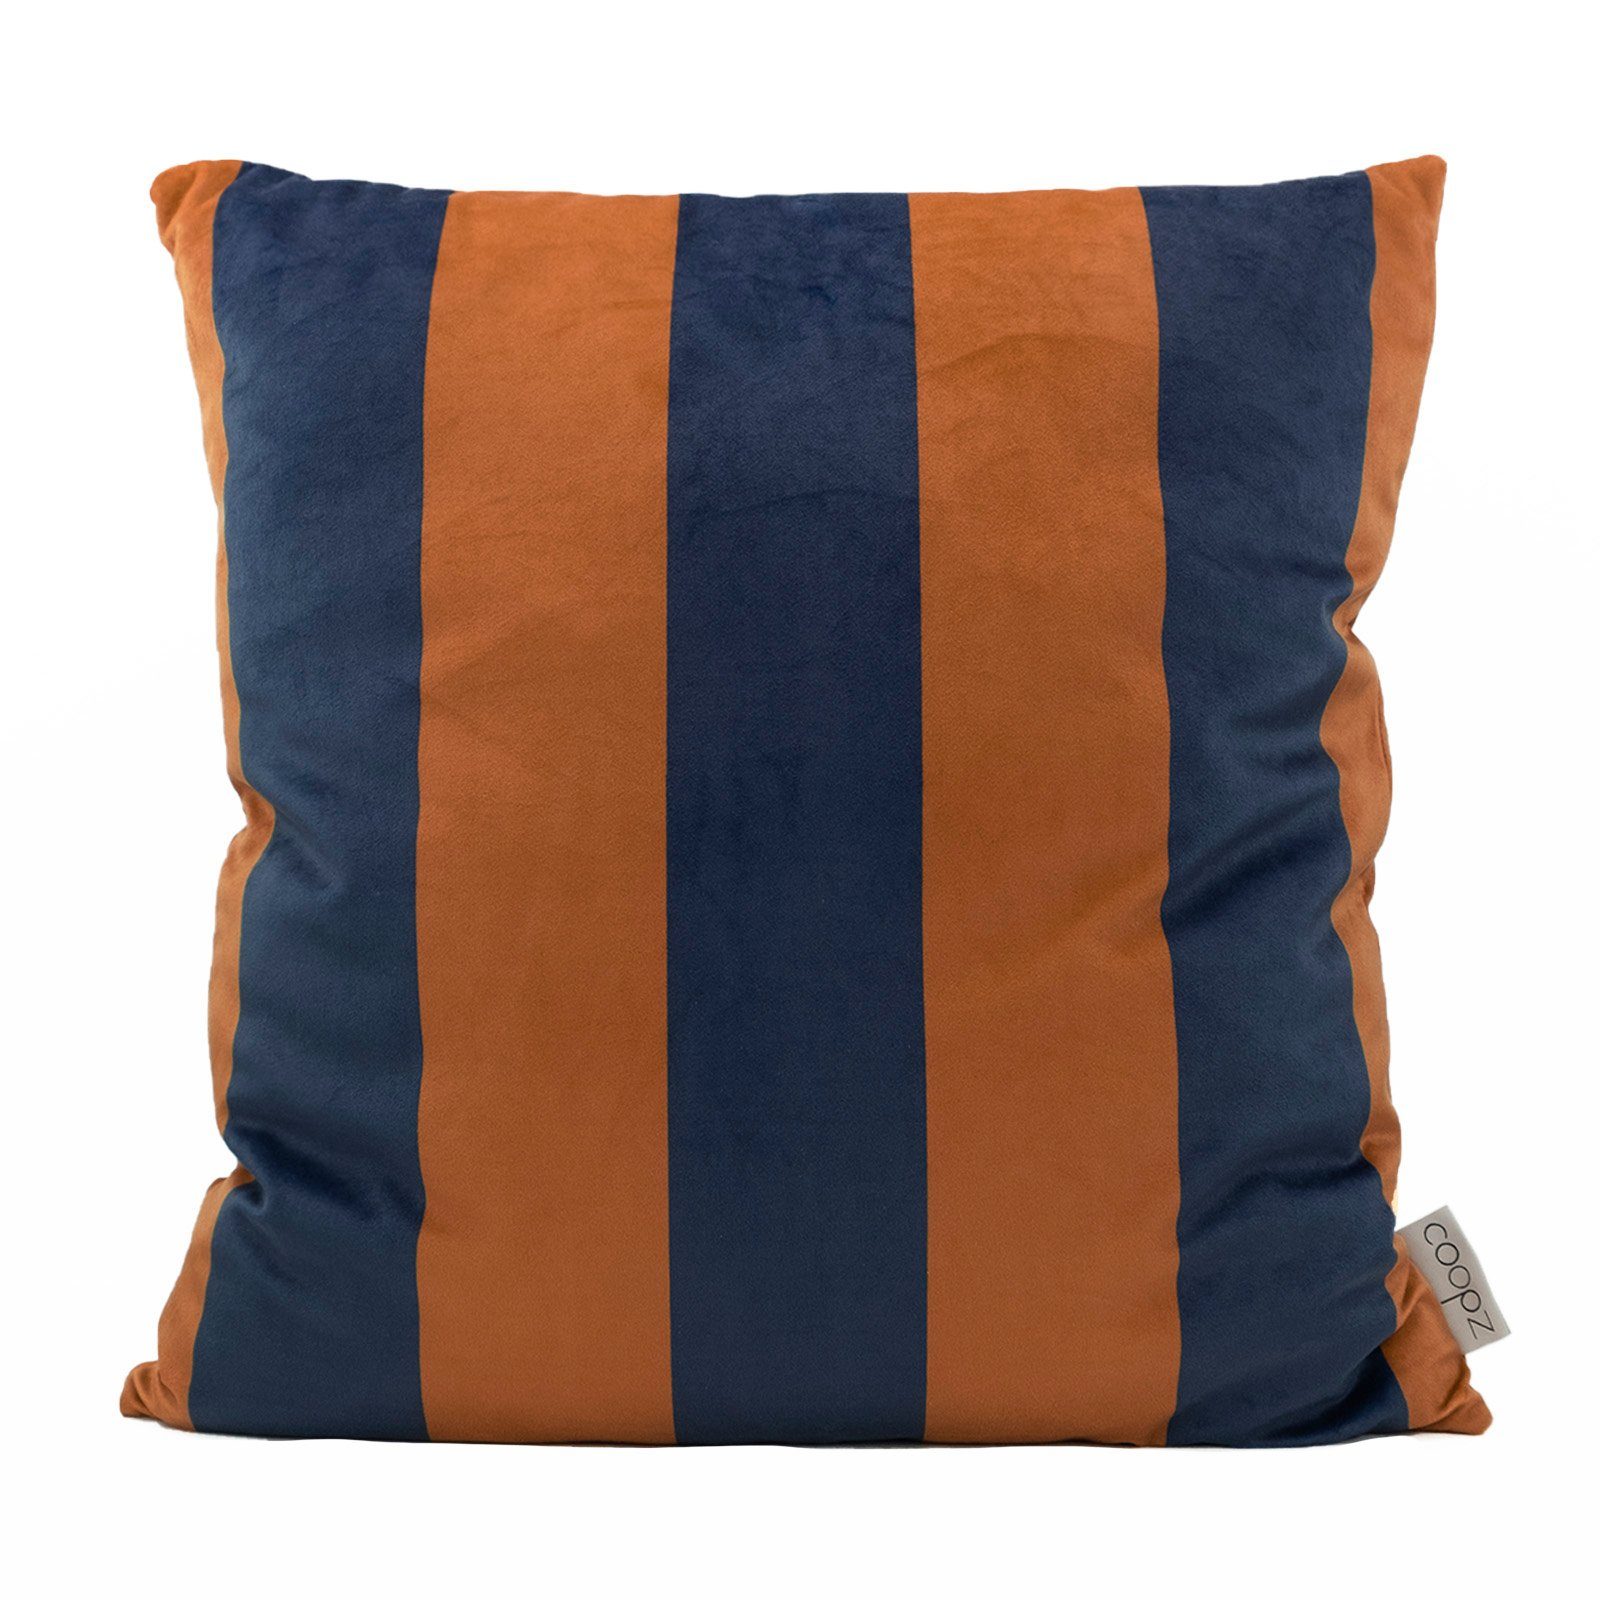 Kissenbezug coopz Kissenbezug Velvet Stripe blue orange Samt nature UV-beständig Handmade Grafik, coopz